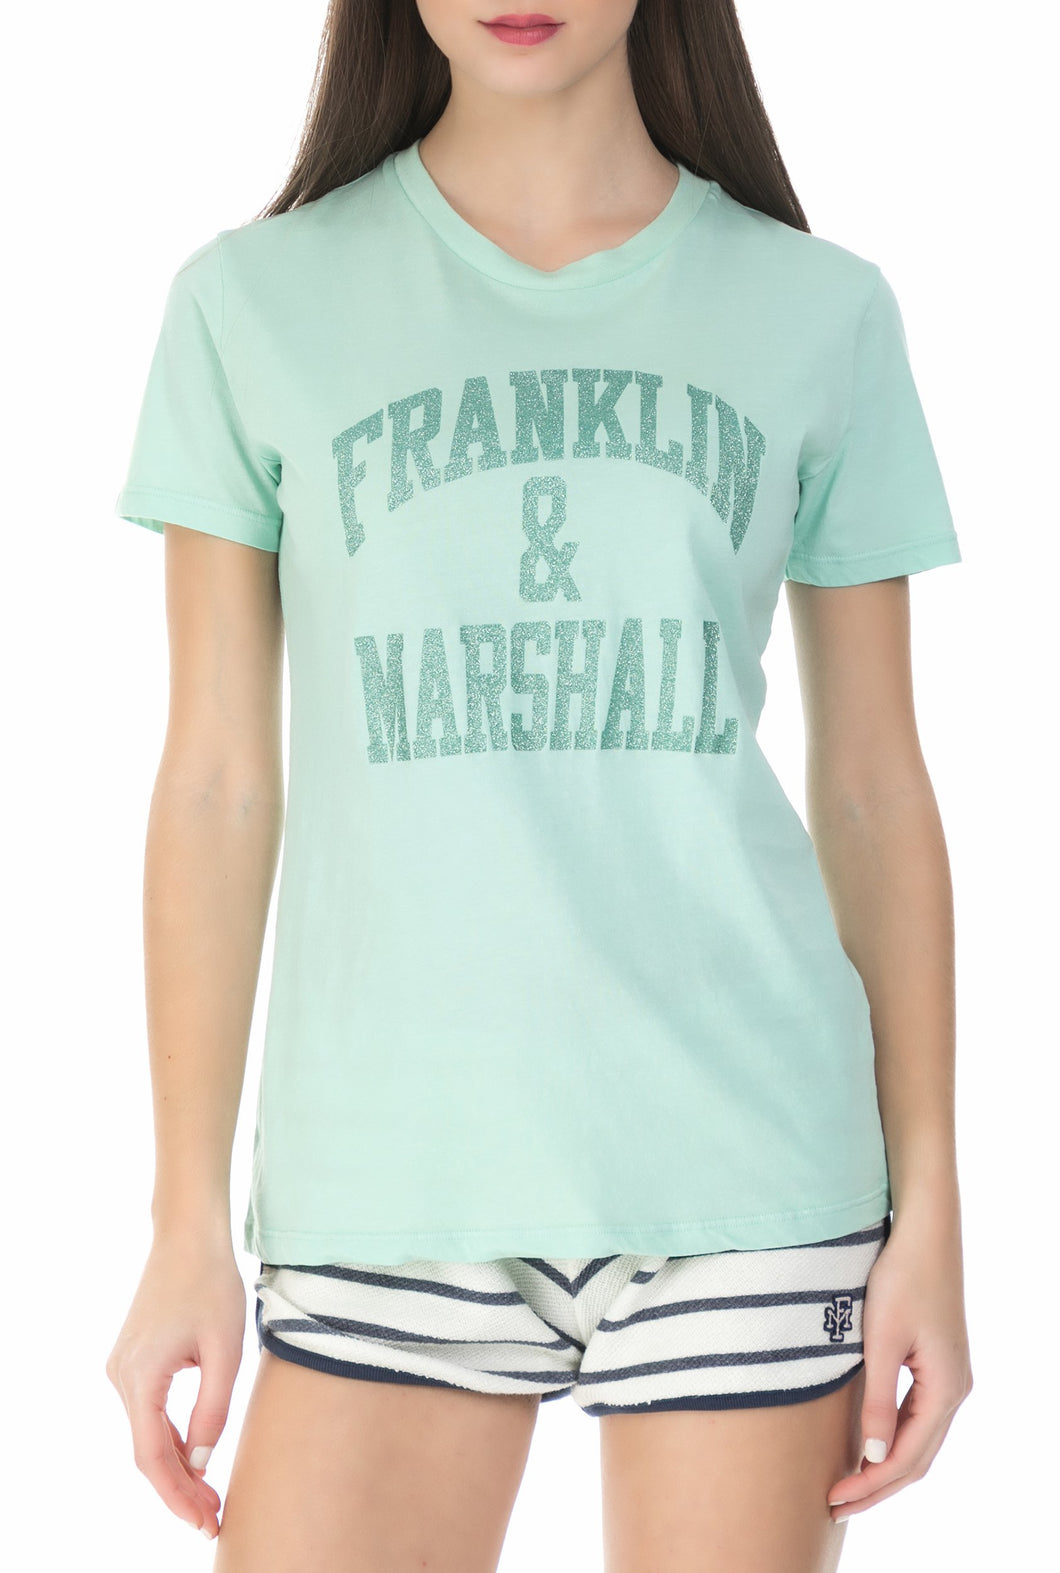 Franklin & Marshall T-SHIRT CLASSIC FIT COLORE BLACK SHADOW logo stampato glitter verde acqua